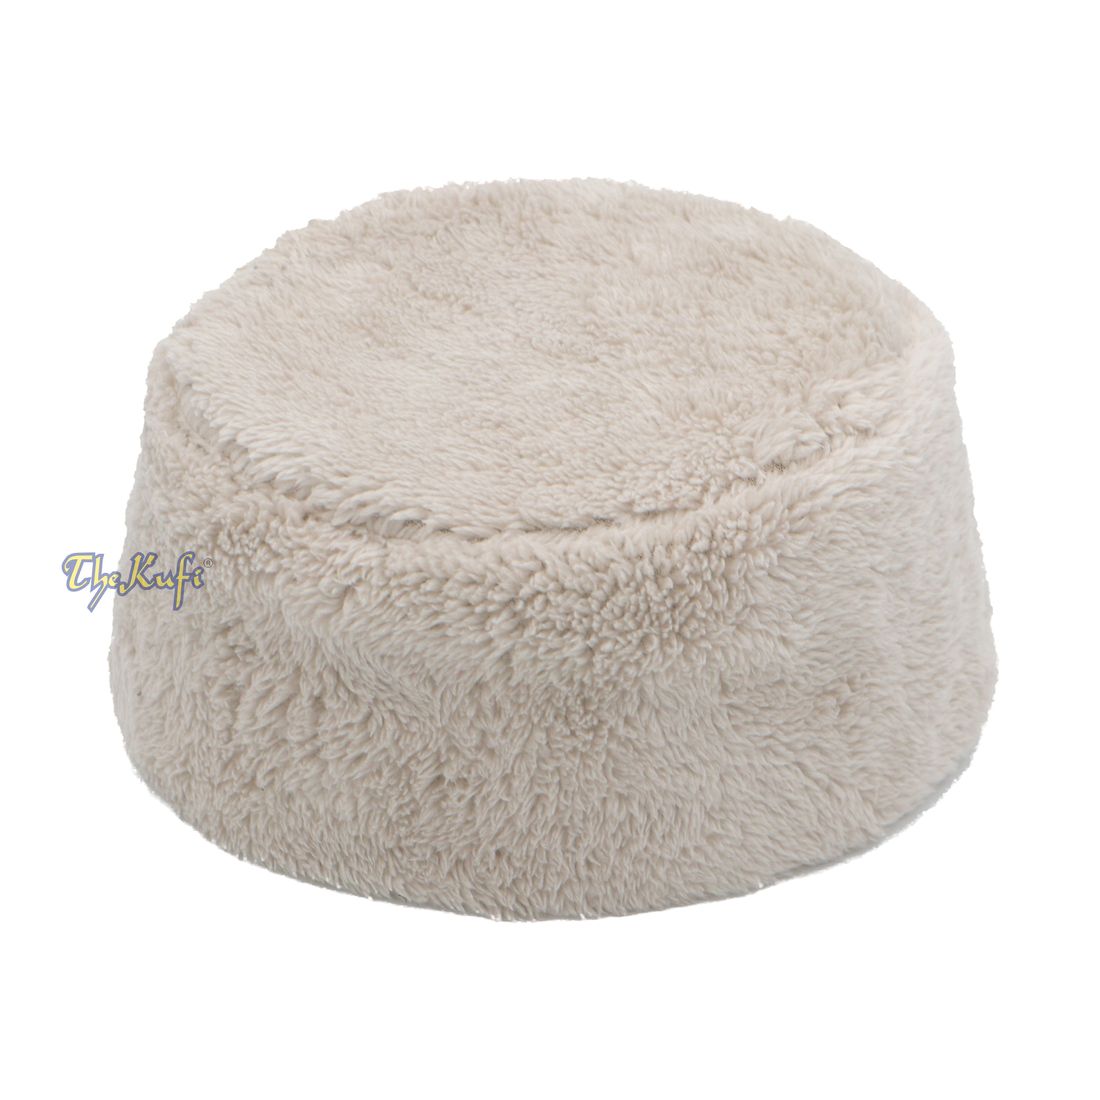 Cream Winter Kufi Faux Fur Warm Chechen Uzbeki Style Islamic Hat Plush One-size Medium-large Stretchy 4-inch Tall Head Cover Muslim